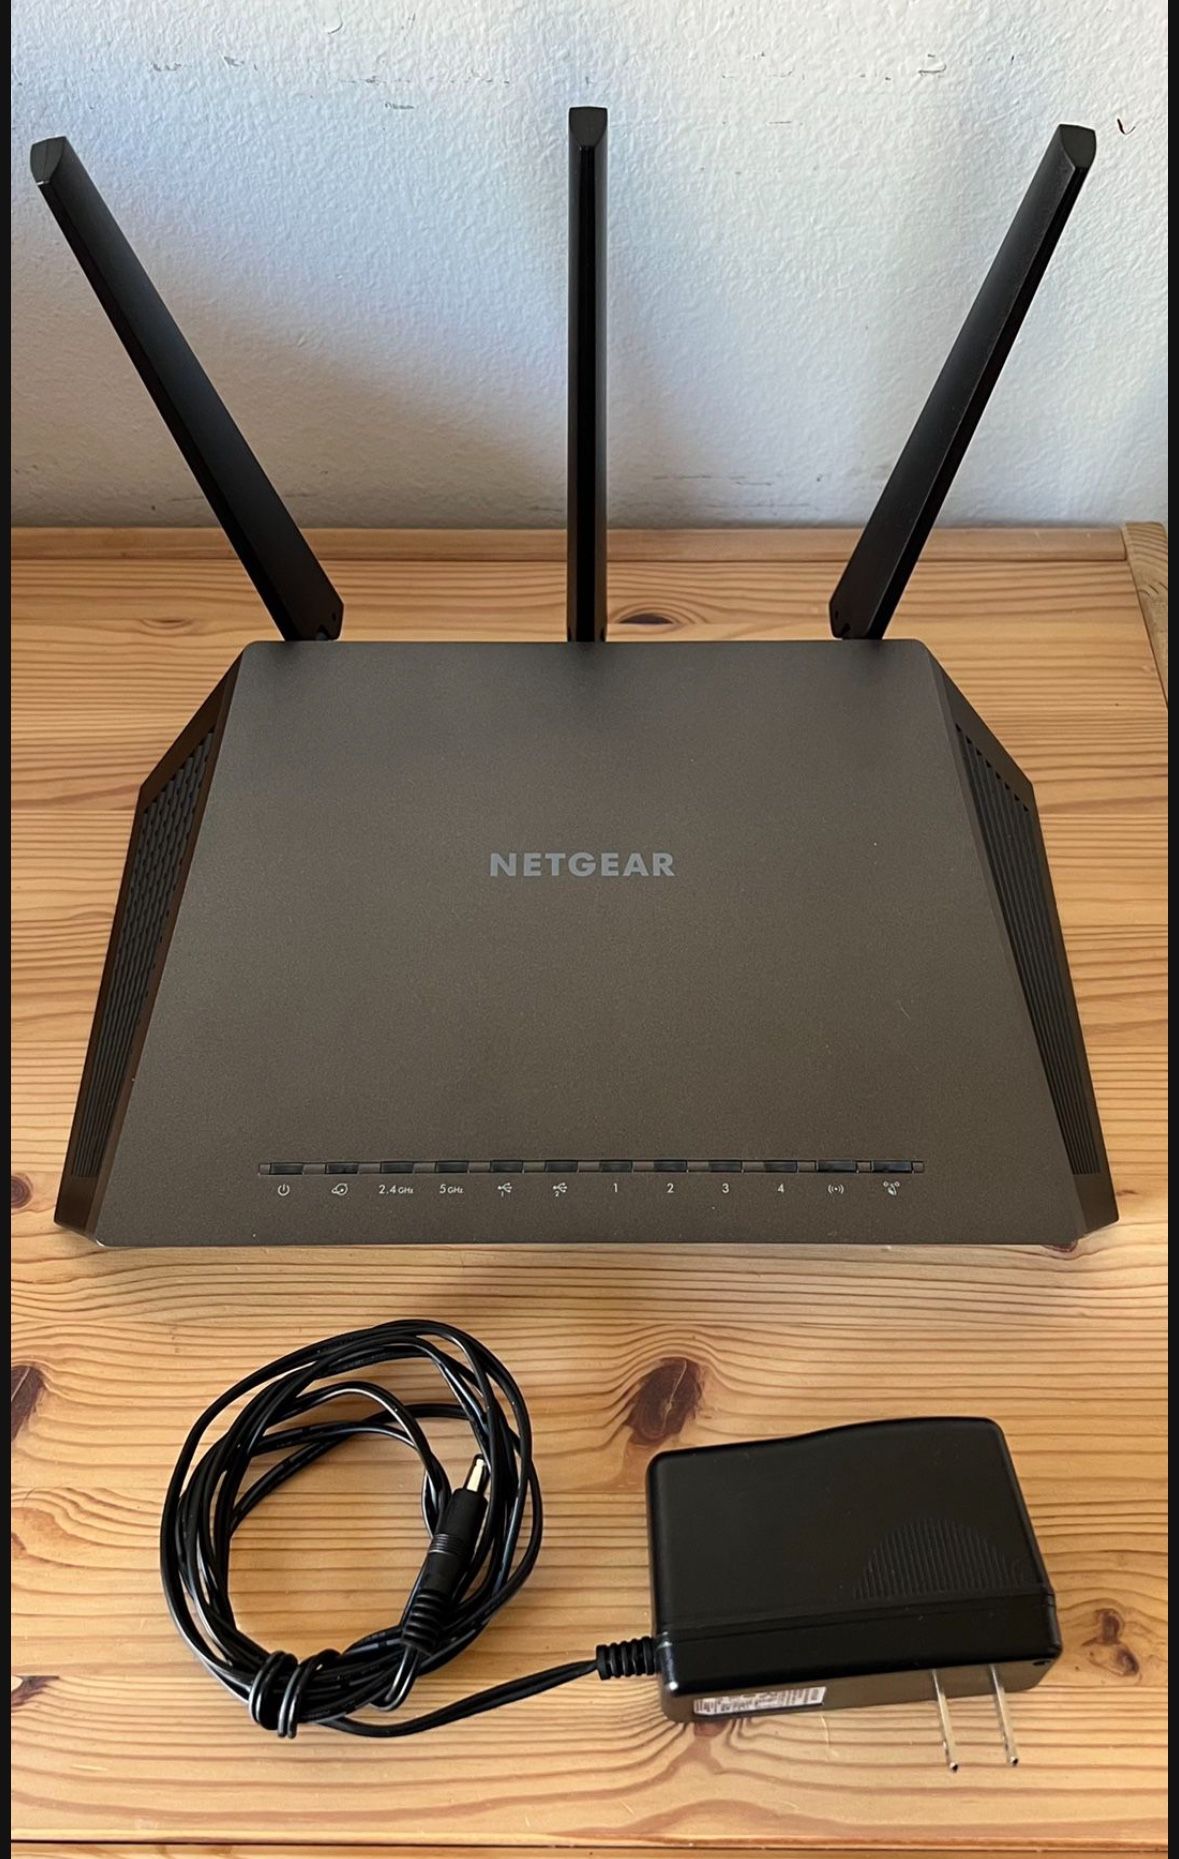 Netgear Nighthawk R7000 WiFi Router Modem